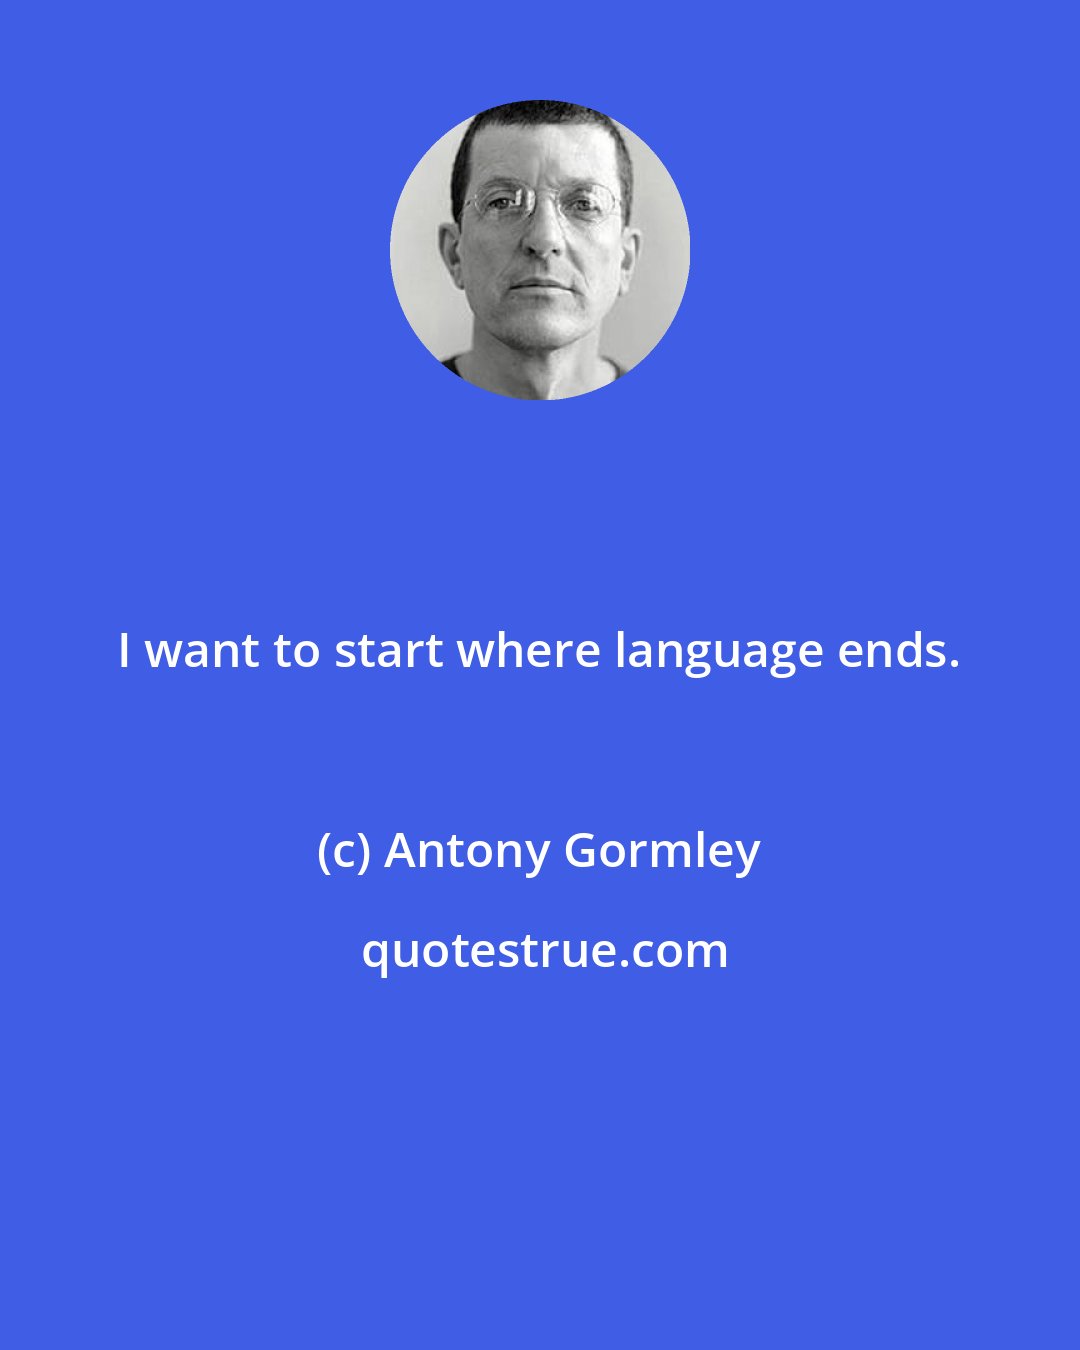 Antony Gormley: I want to start where language ends.